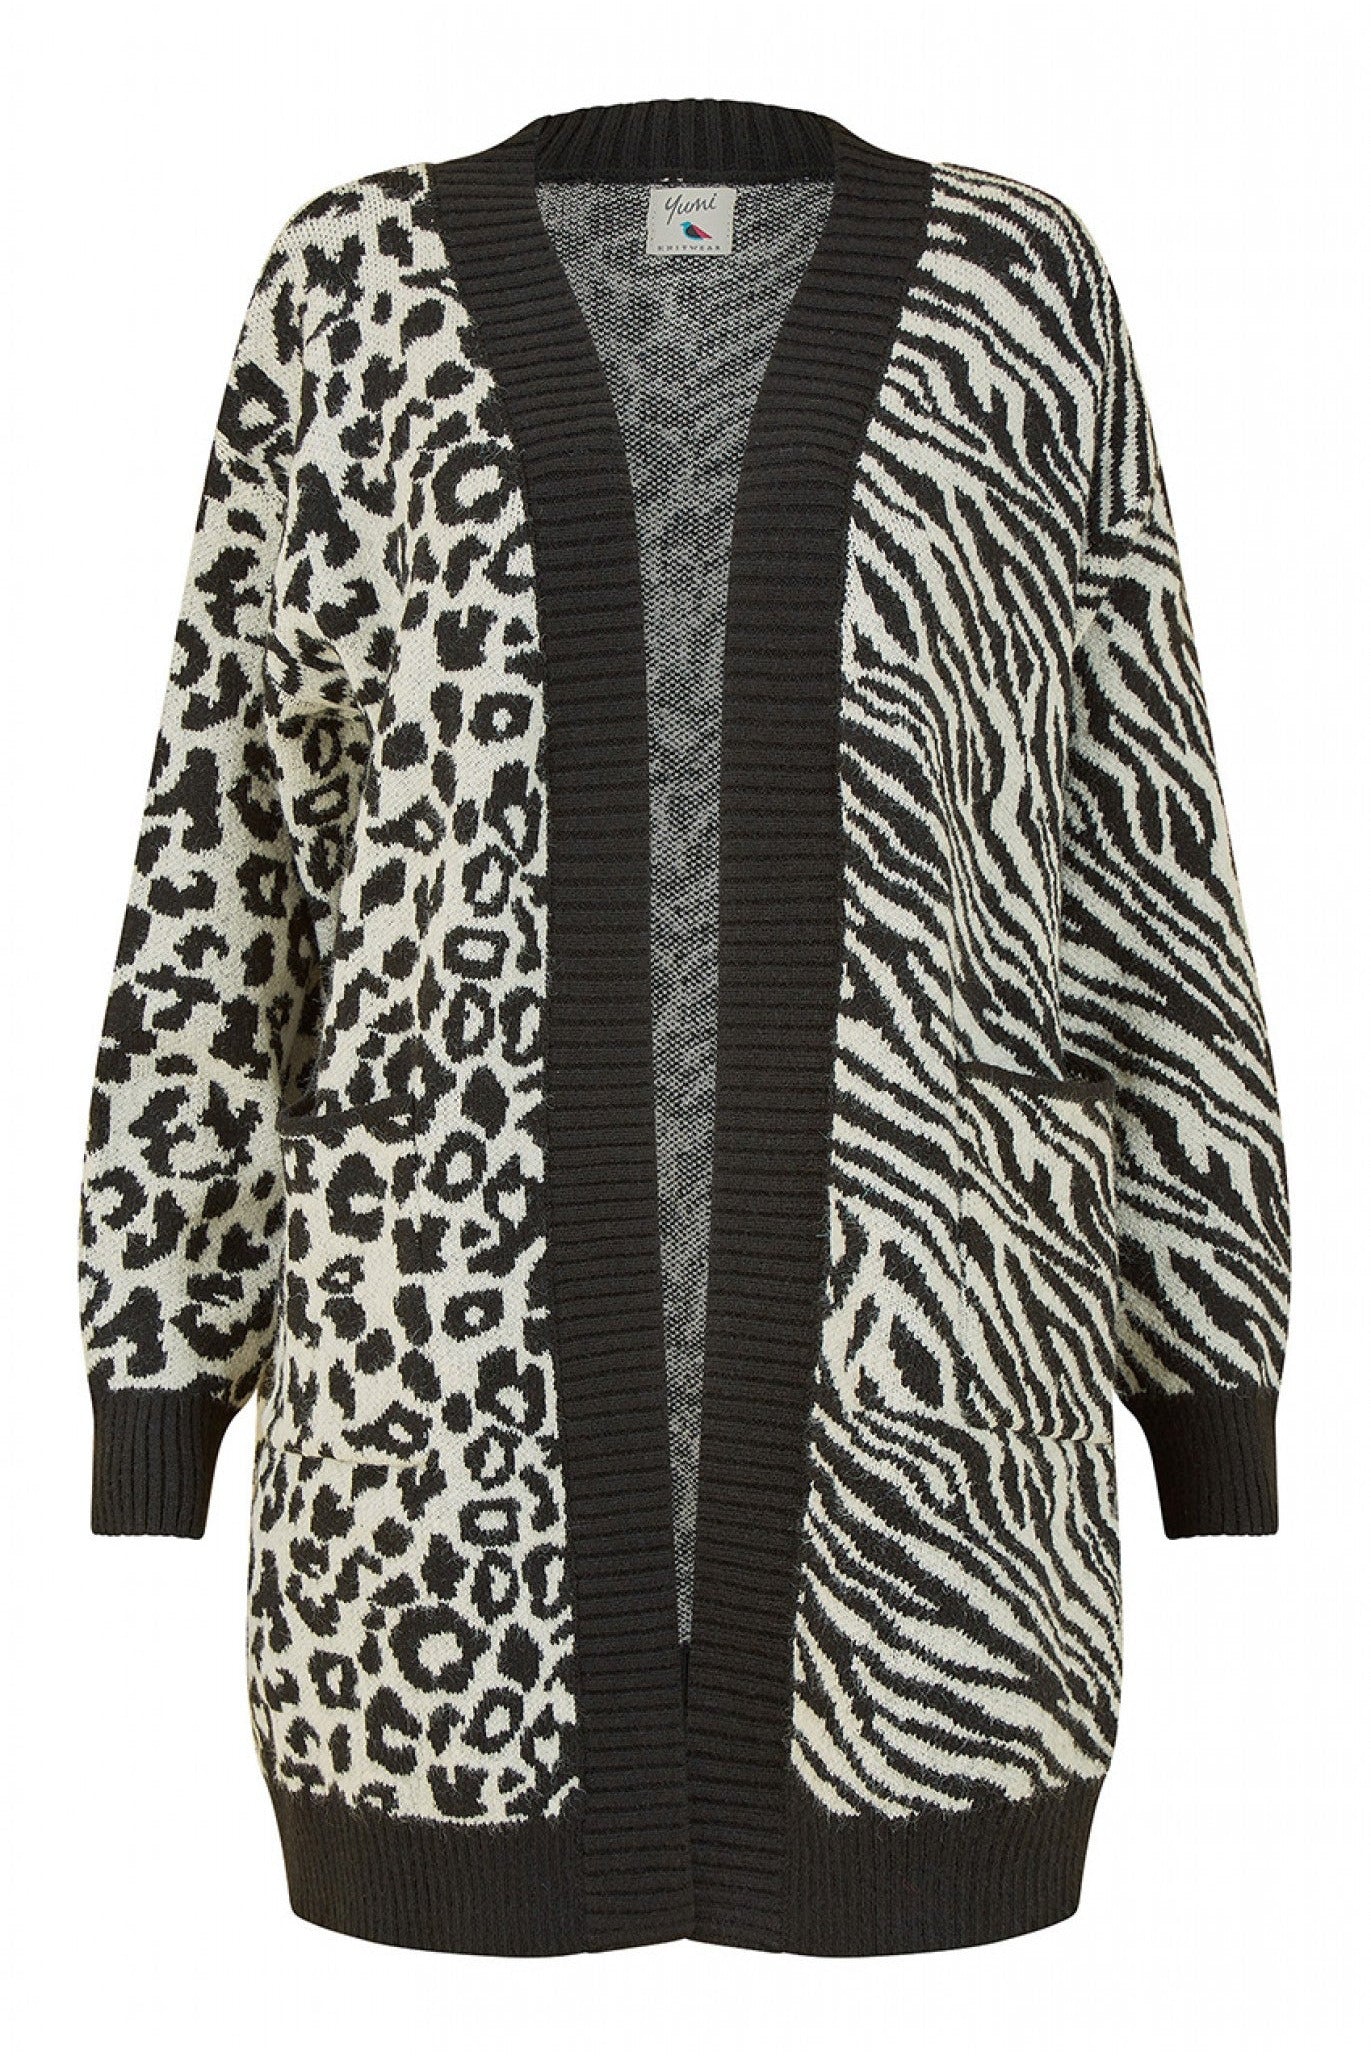 Black Zebra And Leopard Print Knitted Intarsia Cardigan YM3889A018